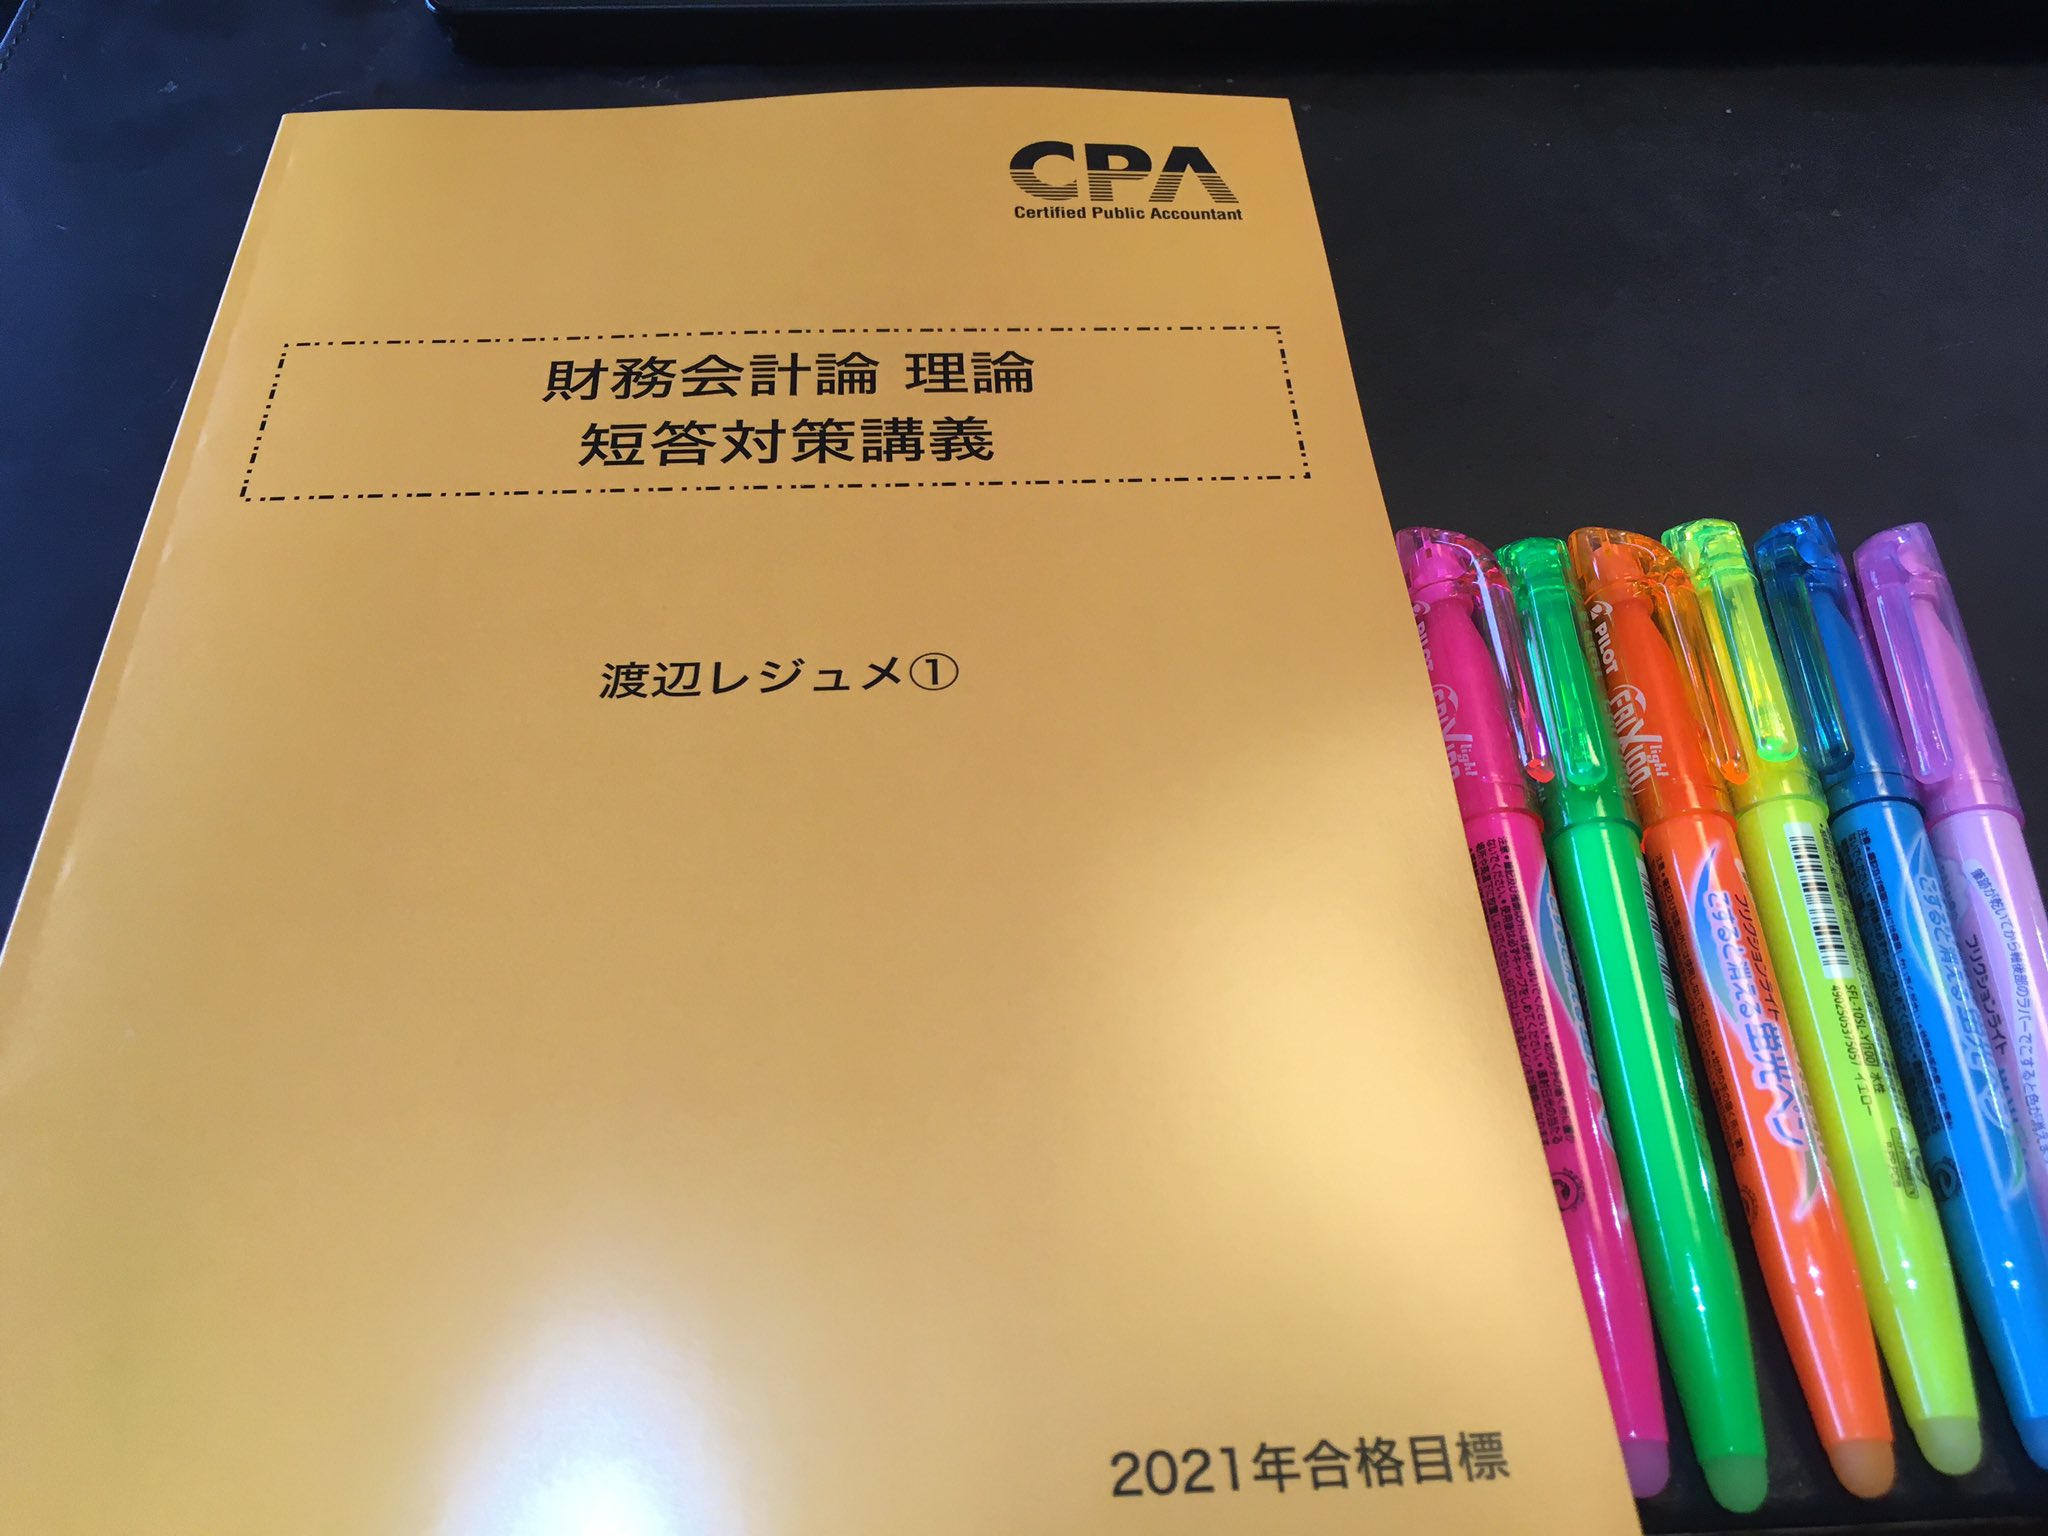 品質一番の CPA 2022年目標 財務会計論理論 短答対策講義 渡辺レジュメ 